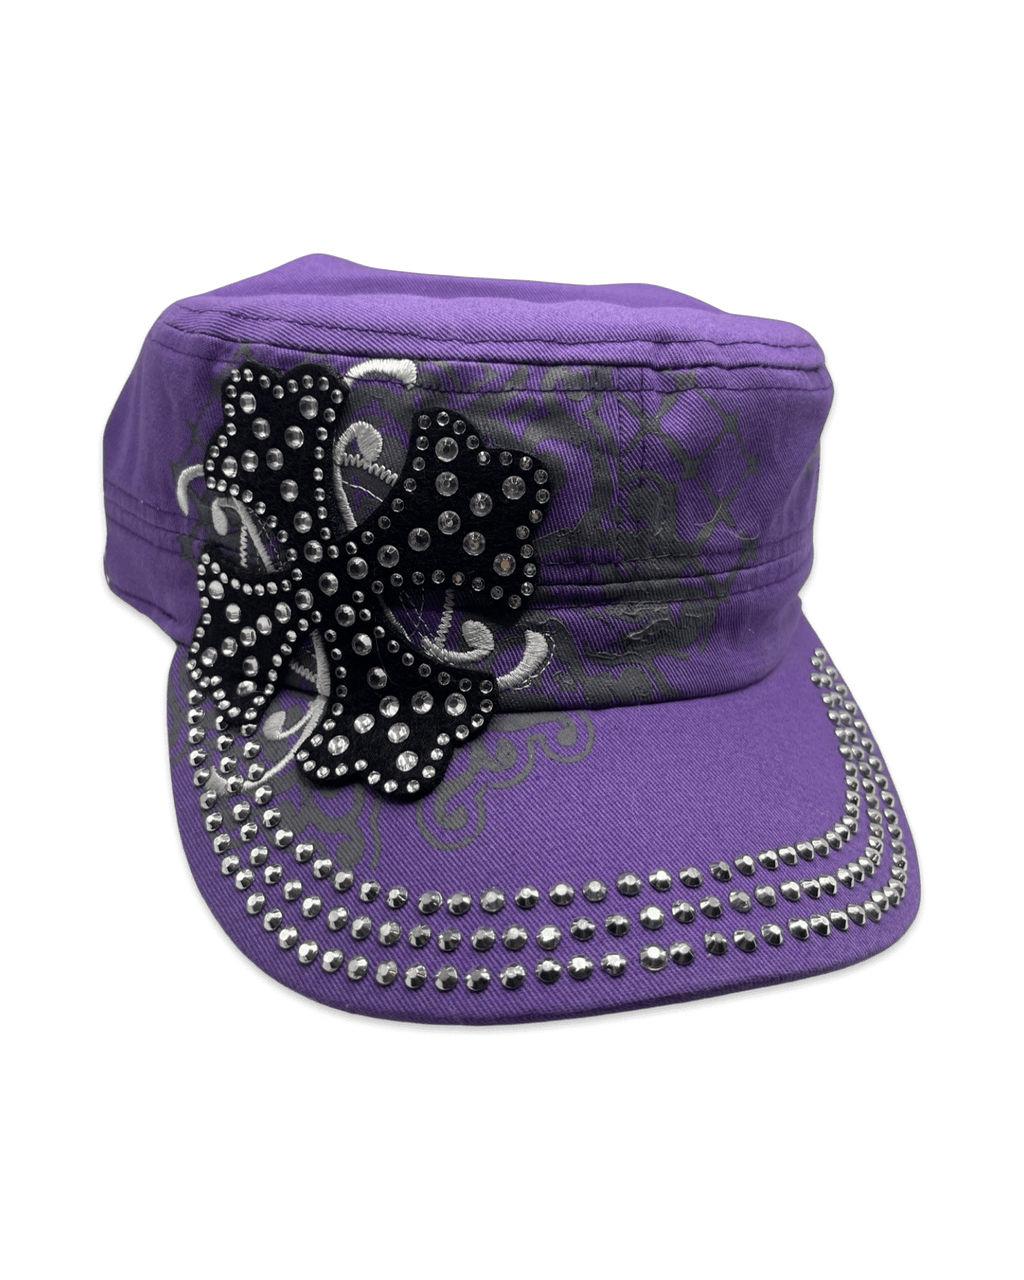 Roxy cadet hat - soft purple ☆